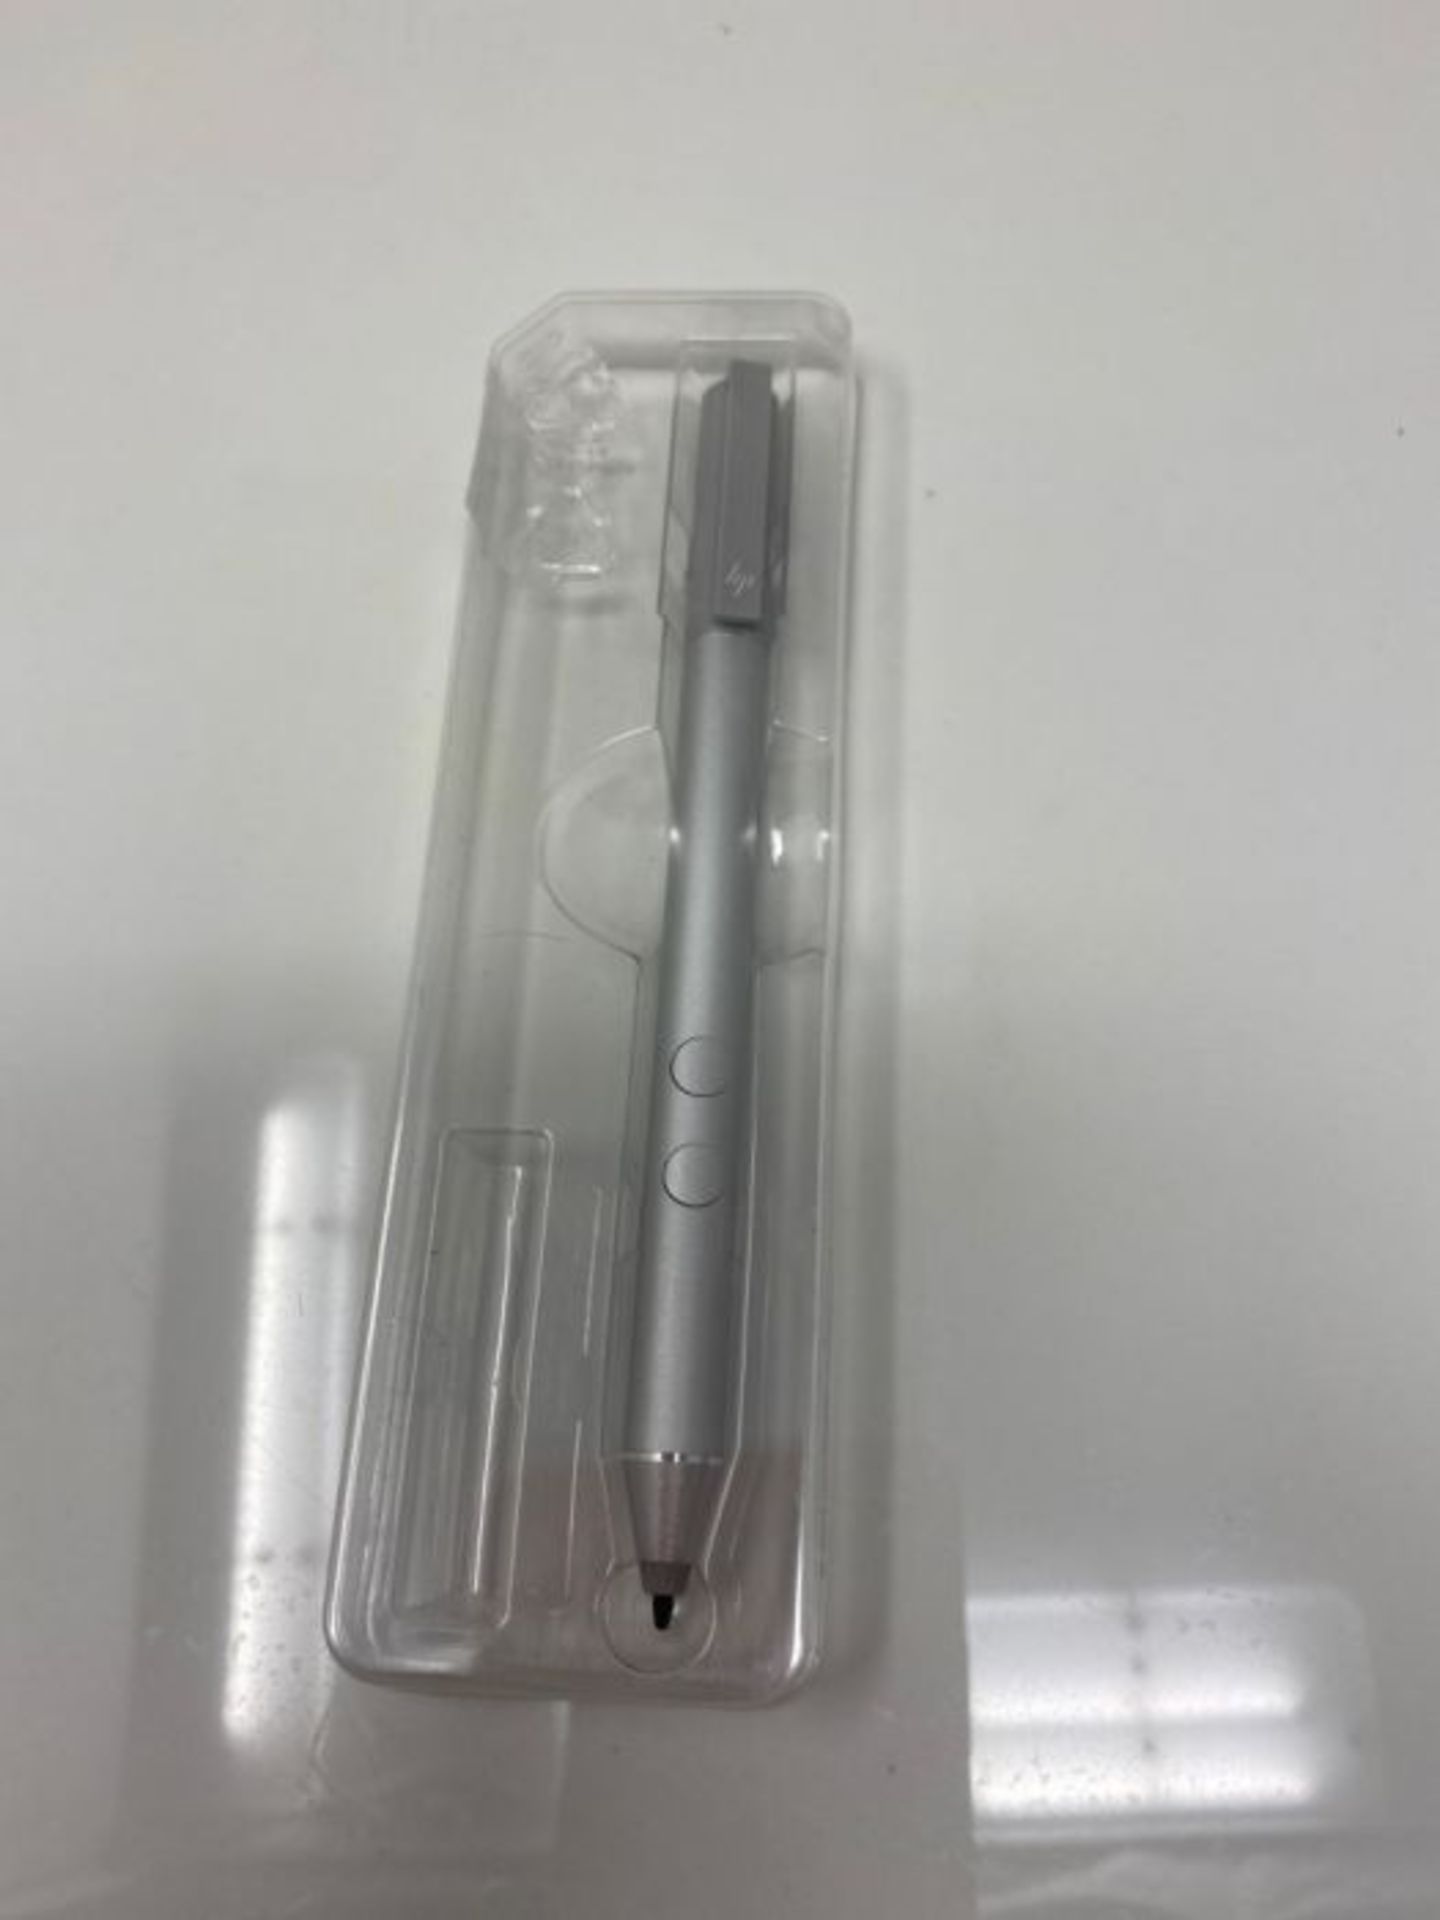 HP Pen Stylus with Pressure Sensitivity for Windows Pen Enabled Laptops, 18-Month Batt - Image 2 of 2